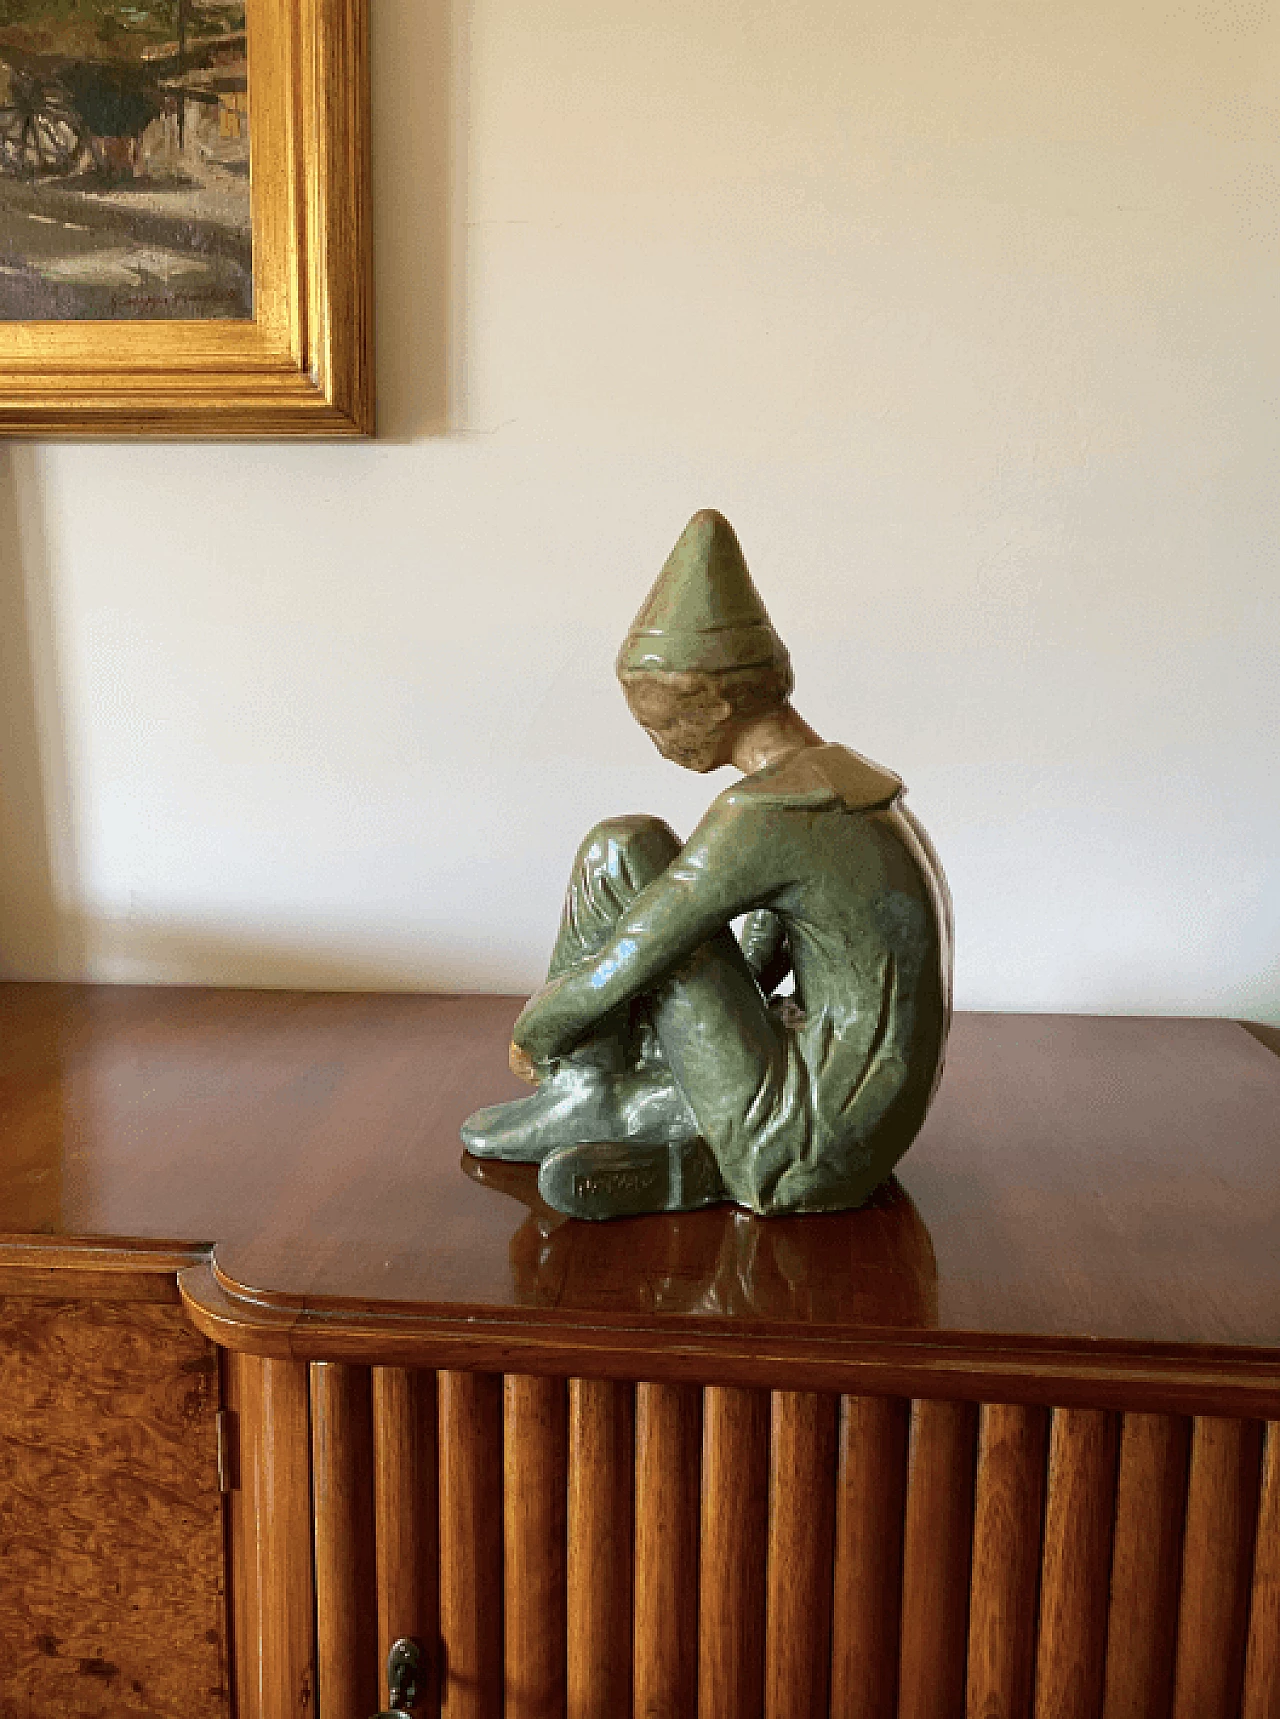 Giordano Tronconi, Seated boy, green ceramic figure from Faenza, 1950s 50